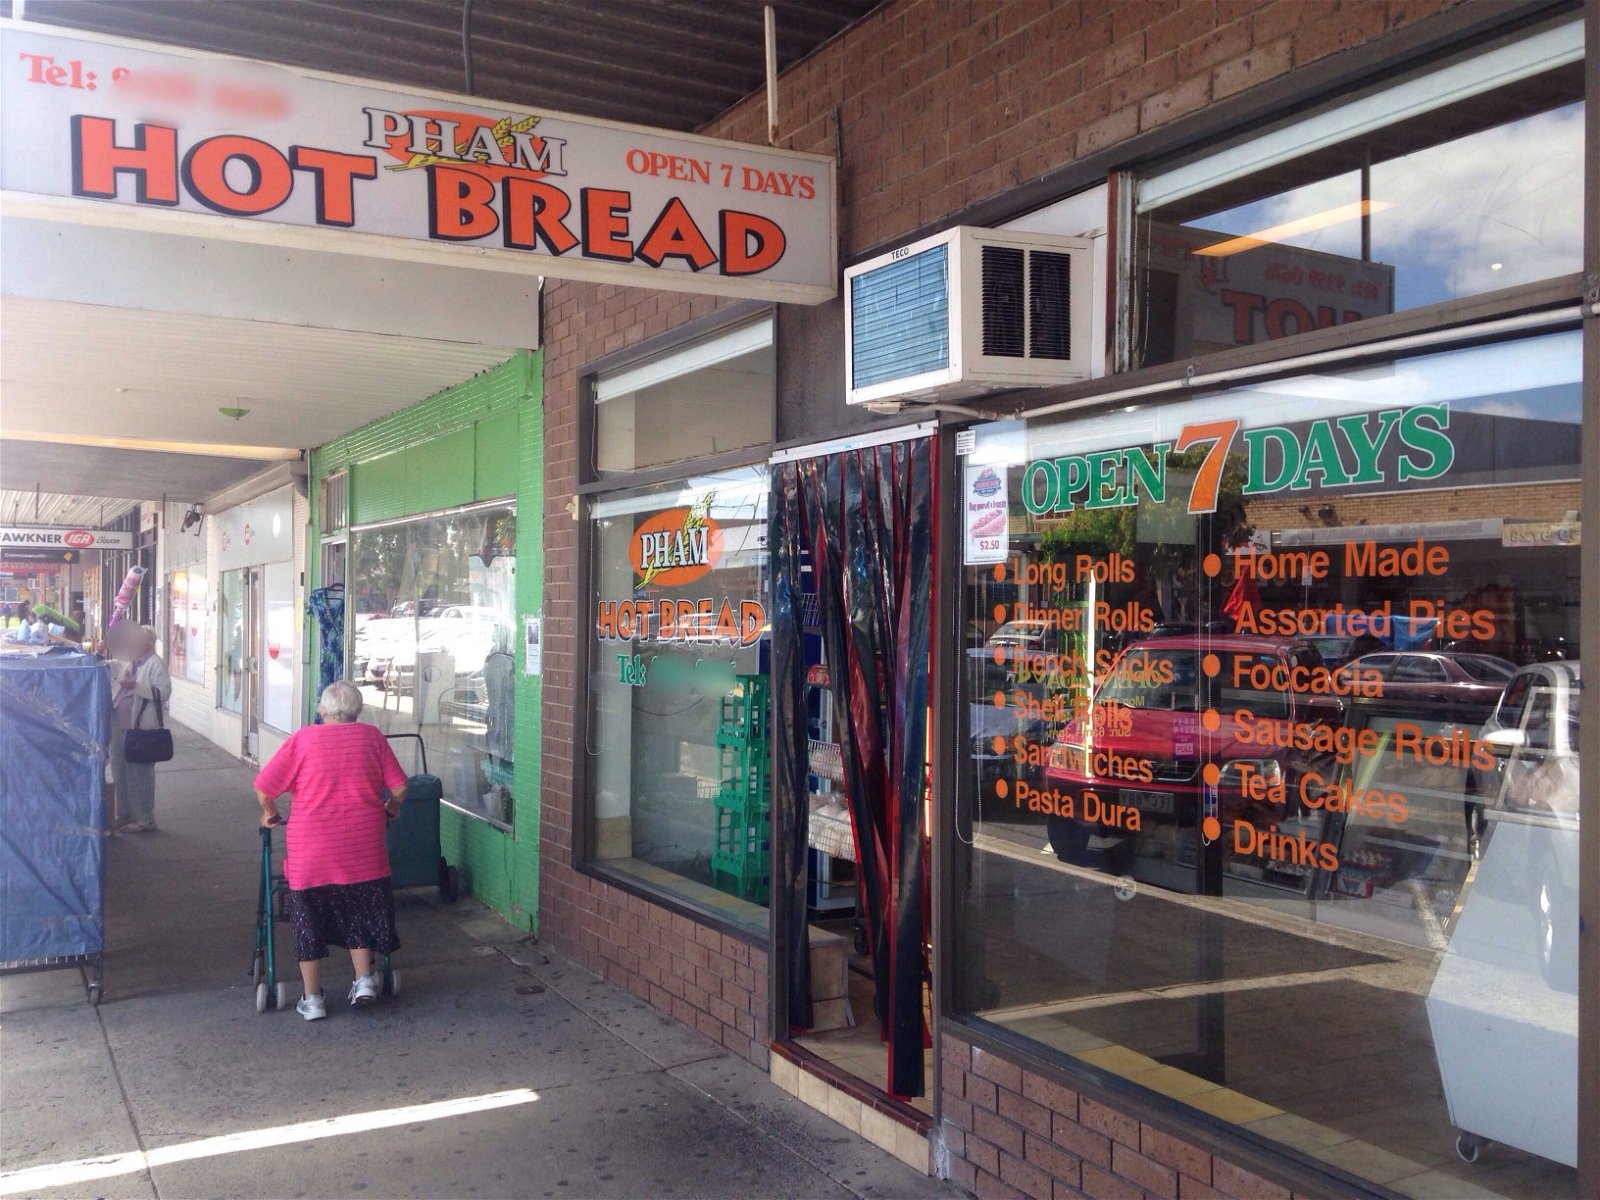 Pham Hot Bread - Pubs Sydney